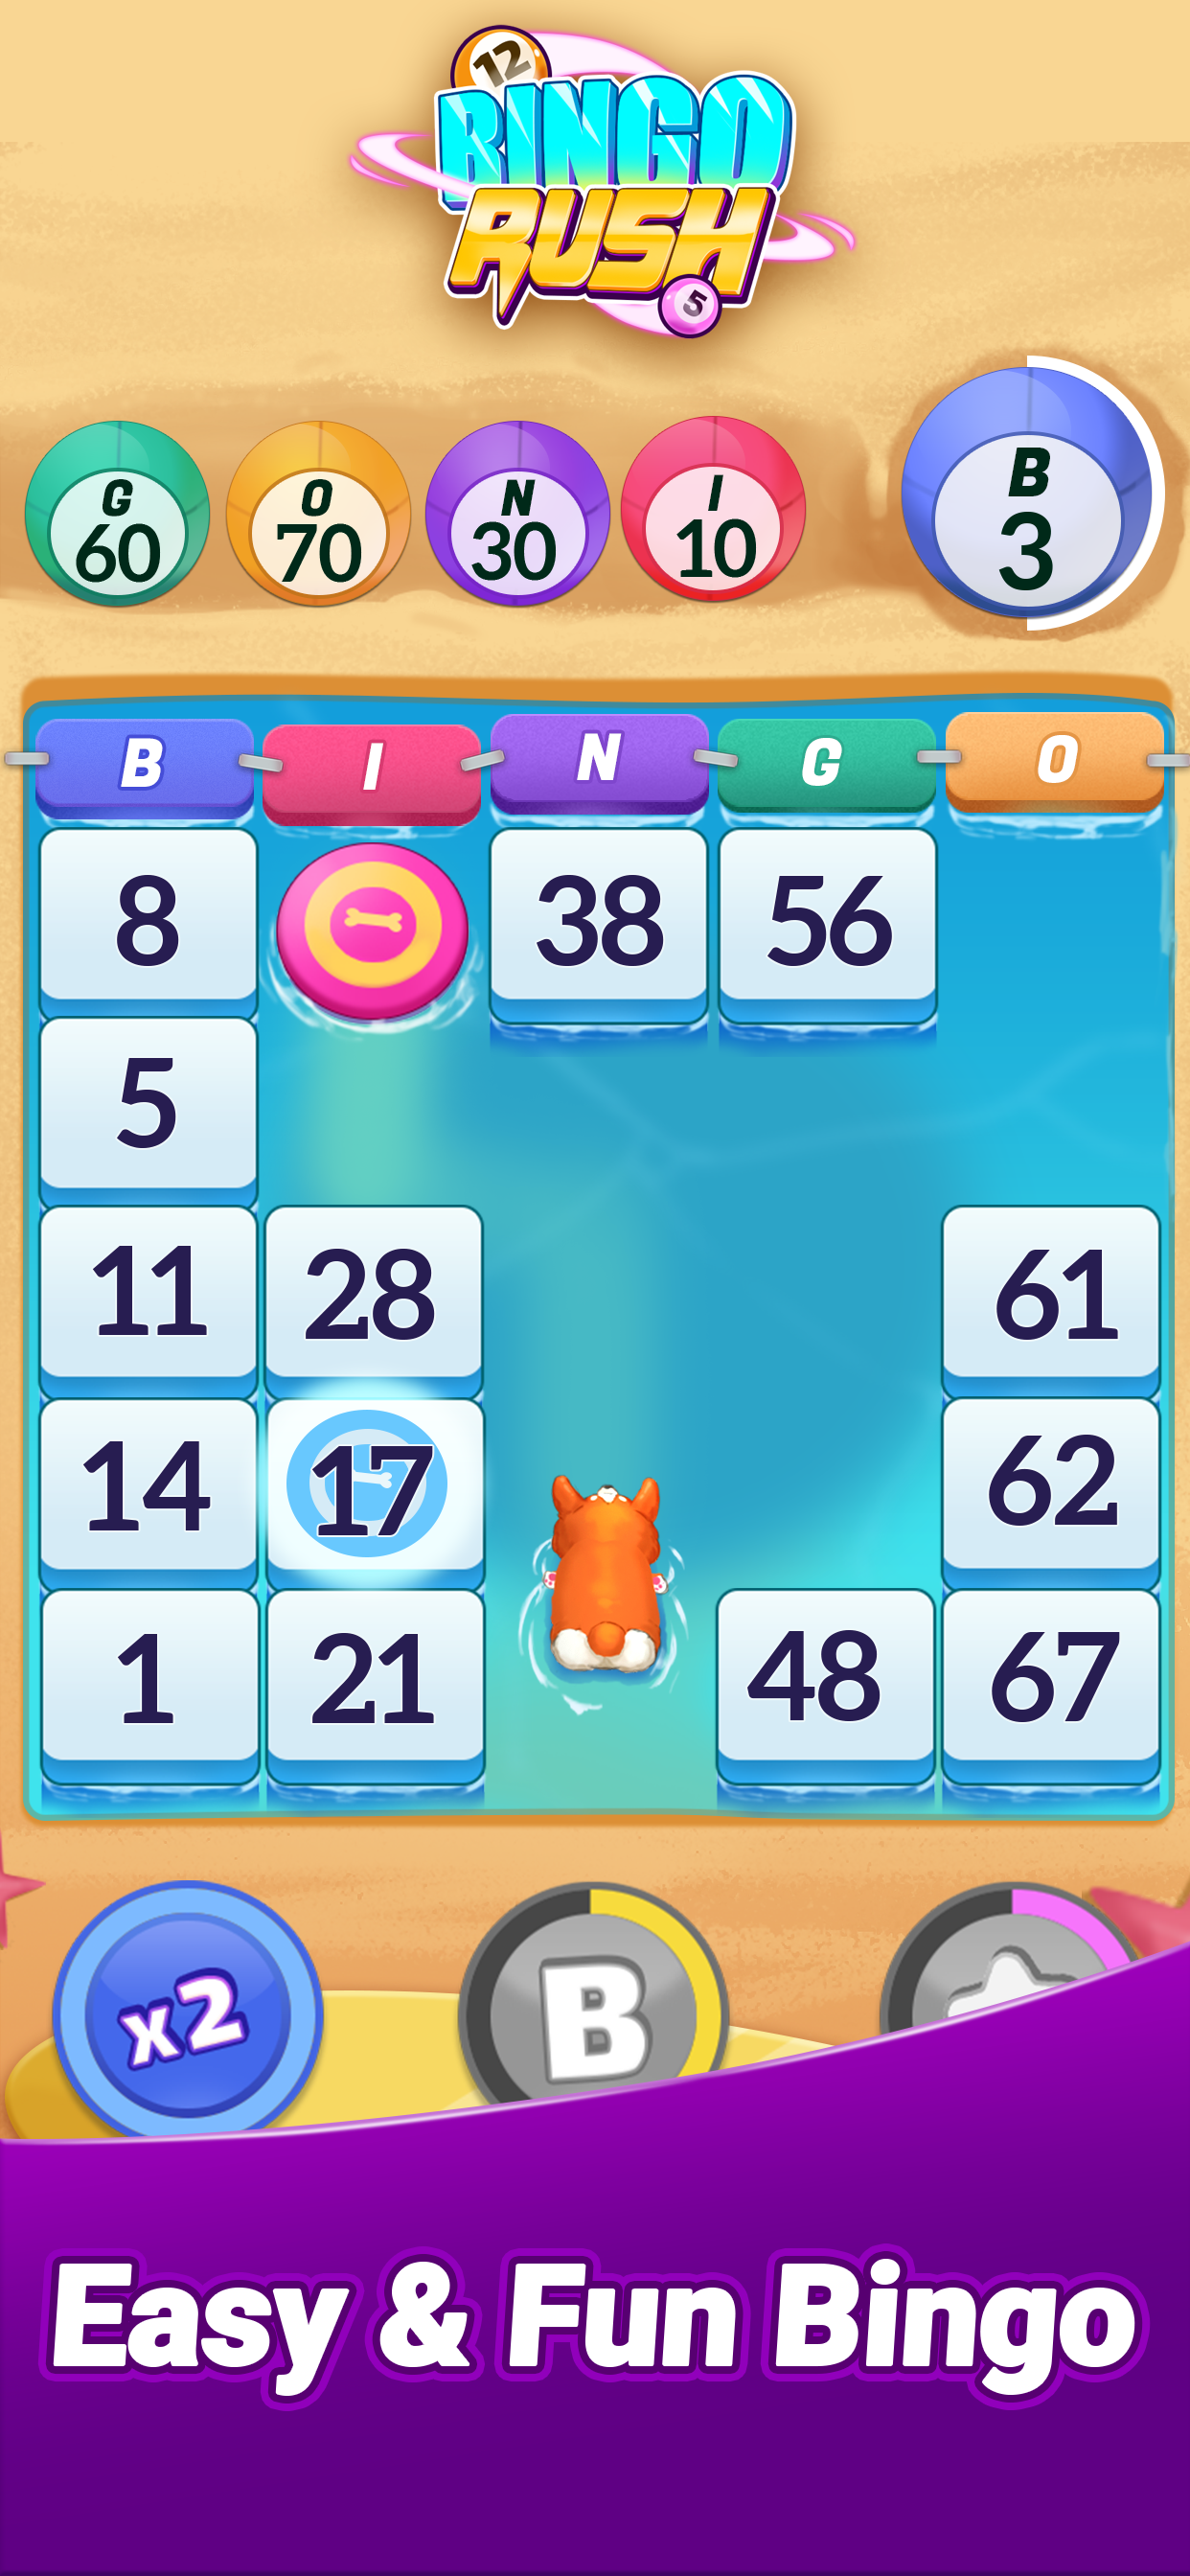 Play Bingo Wish - Fun Bingo Game Online